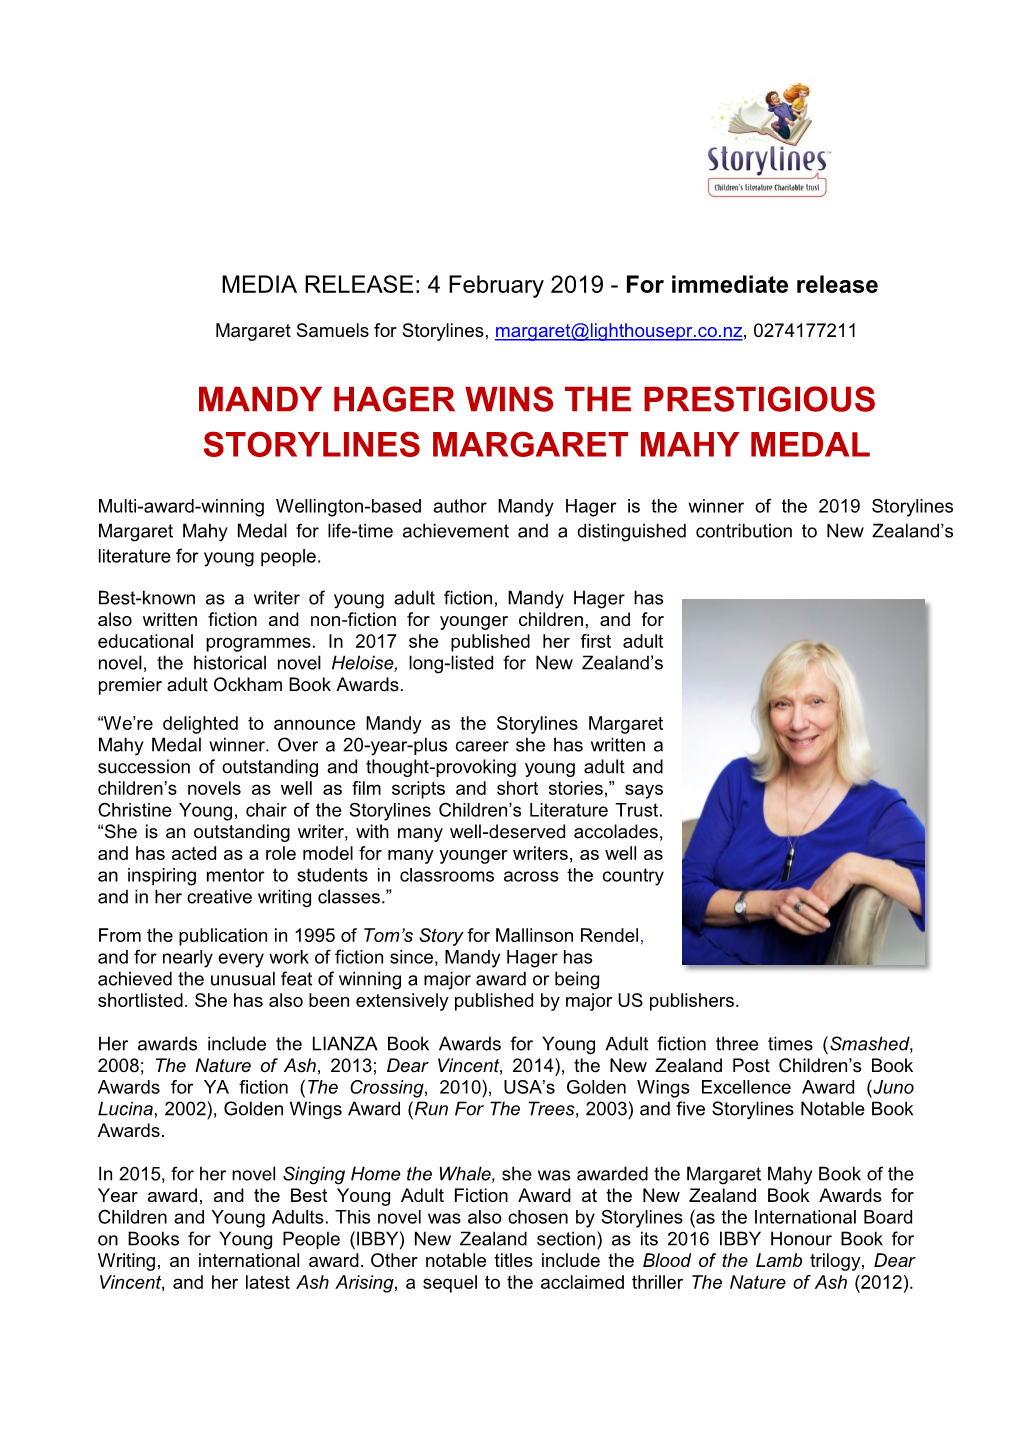 Mandy Hager Wins the Prestigious Storylines Margaret Mahy Medal